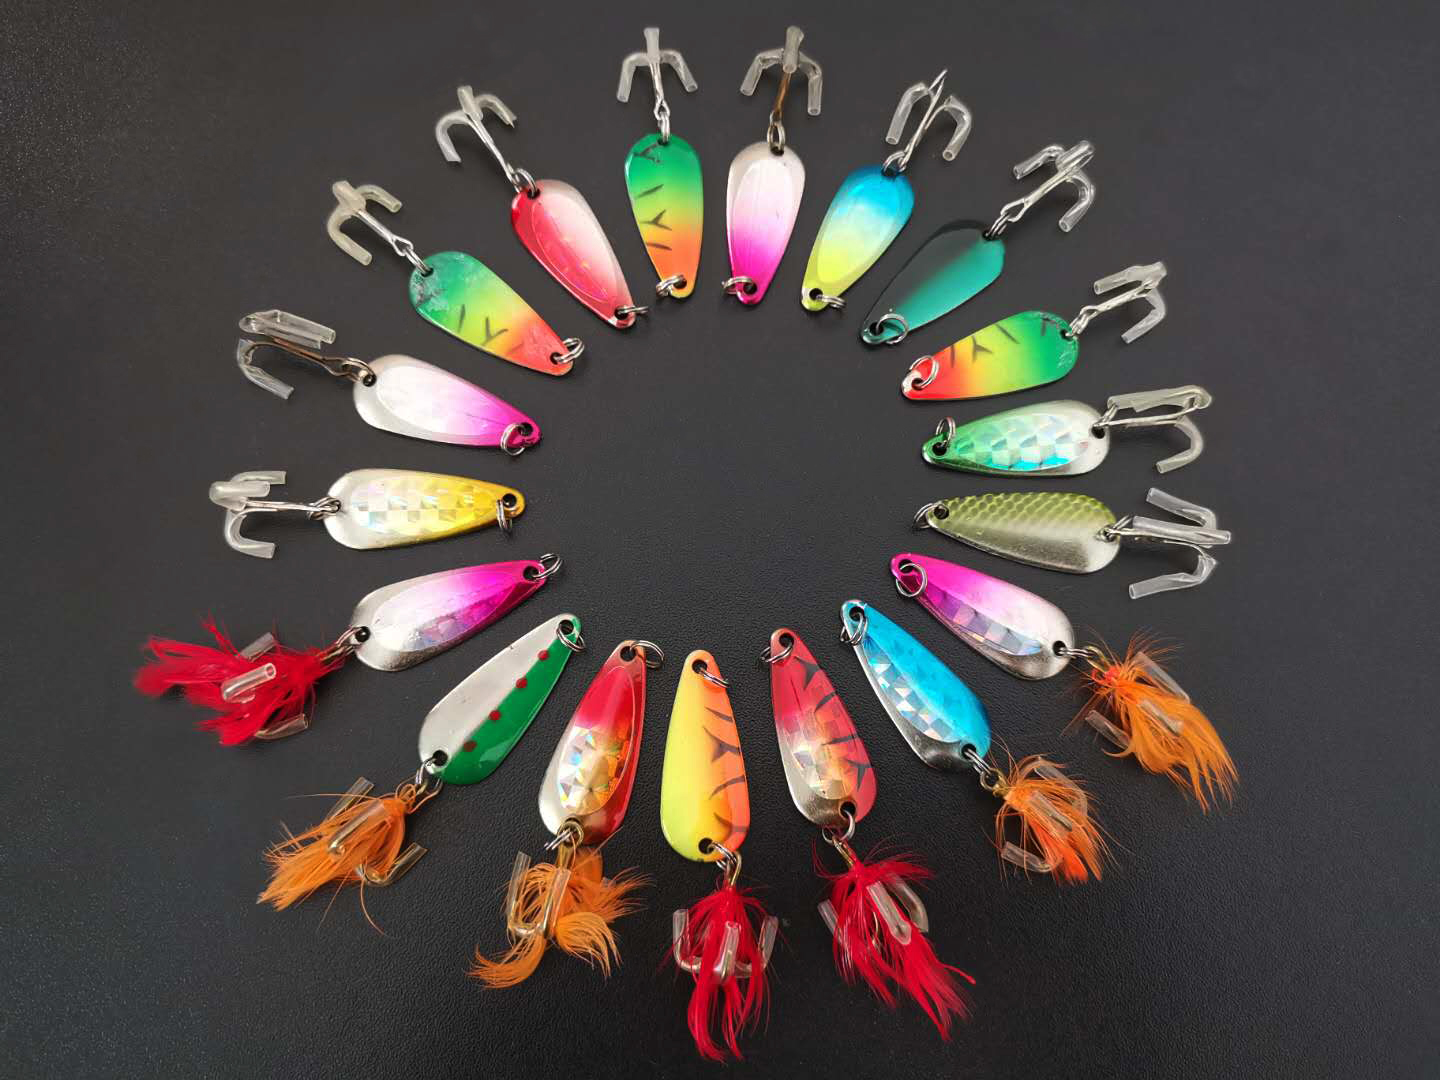 

Wholesale 50pcs Fishing Lures Spoons Kit Crankbait Spoon Bass Trout Walleye 5g/3.5cm Mixed Colours